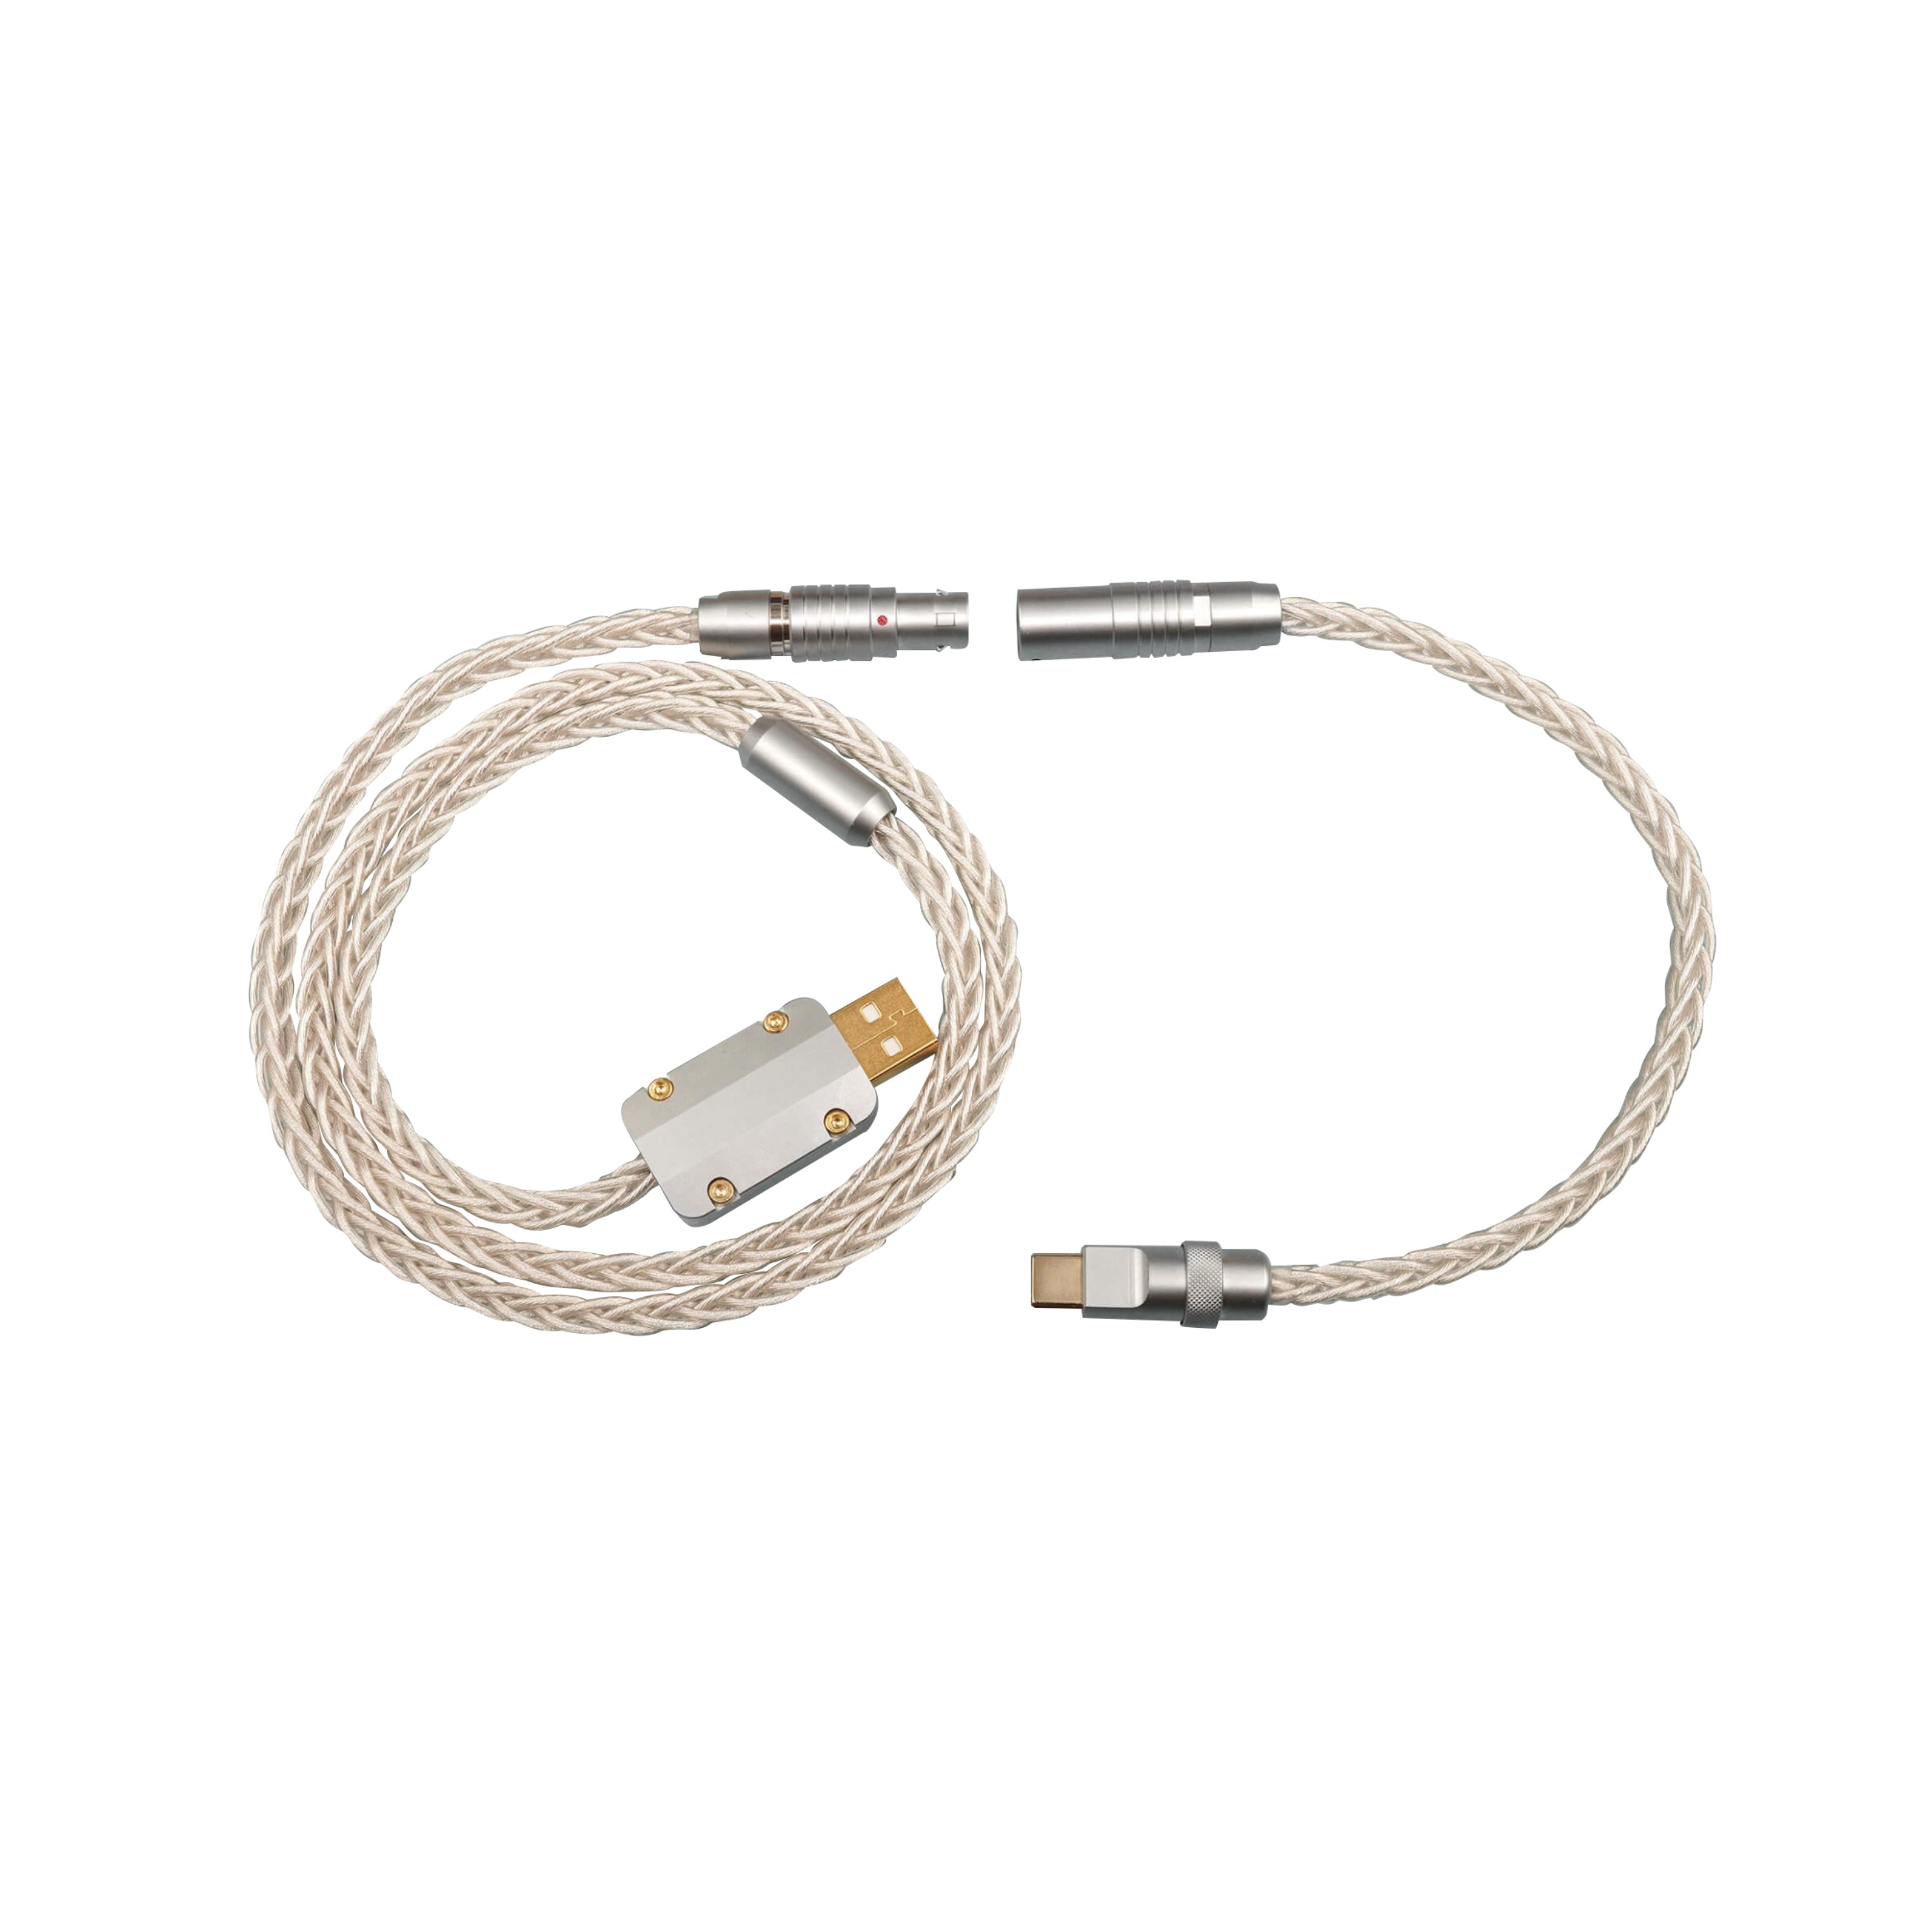 MelGeek Handgefertigtes USB-Kabel mit silberummanteltem Monokristall-Kupferdraht